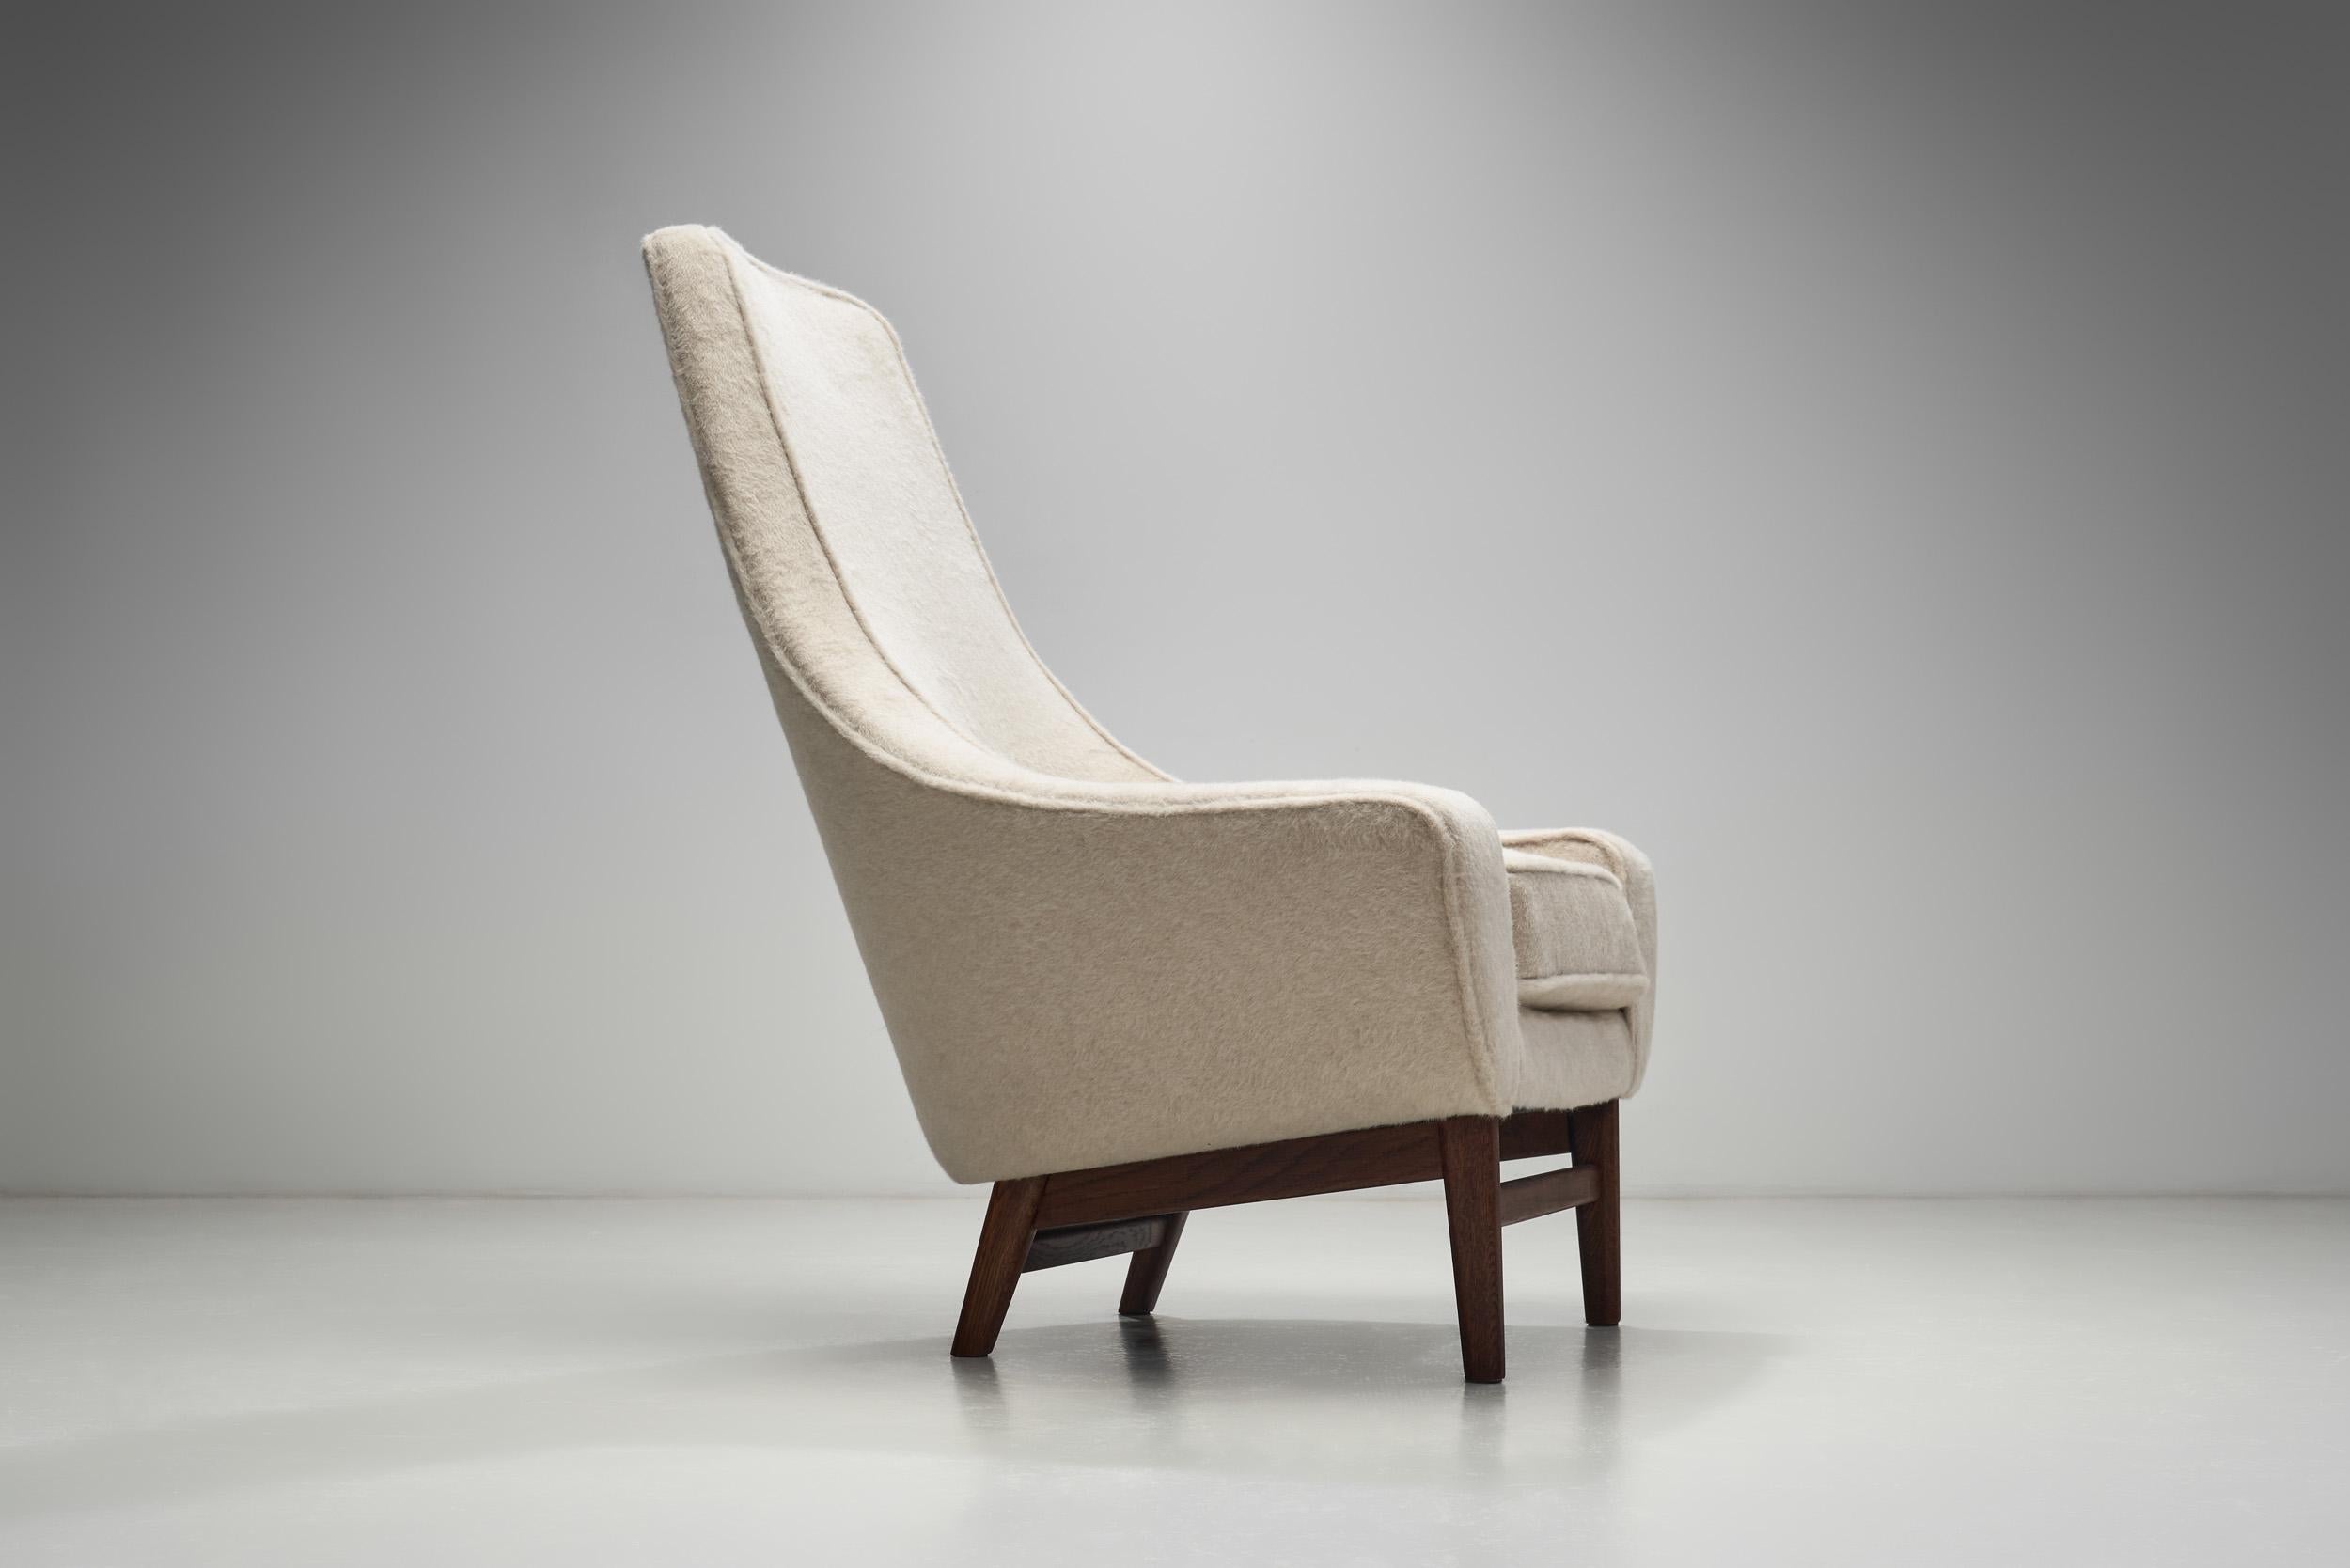 Mid-20th Century Upholstered Lounge Chair by Folke Jansson for Wincrantz Skövde, Sweden 1960s For Sale